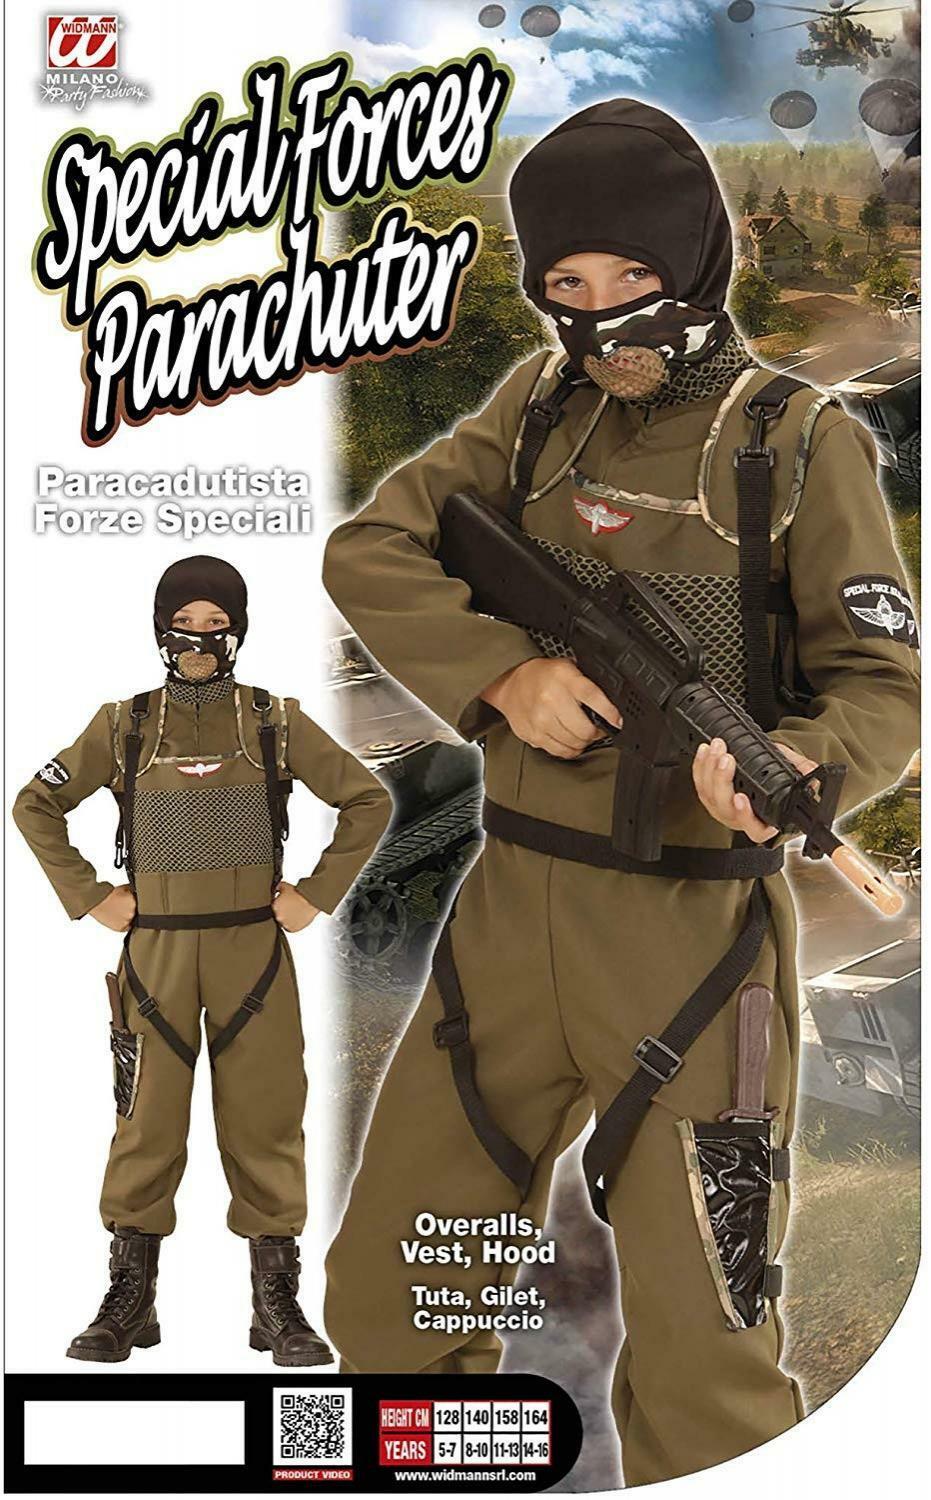 widmann costume paracadutista forze speciali taglia 4/5 anni